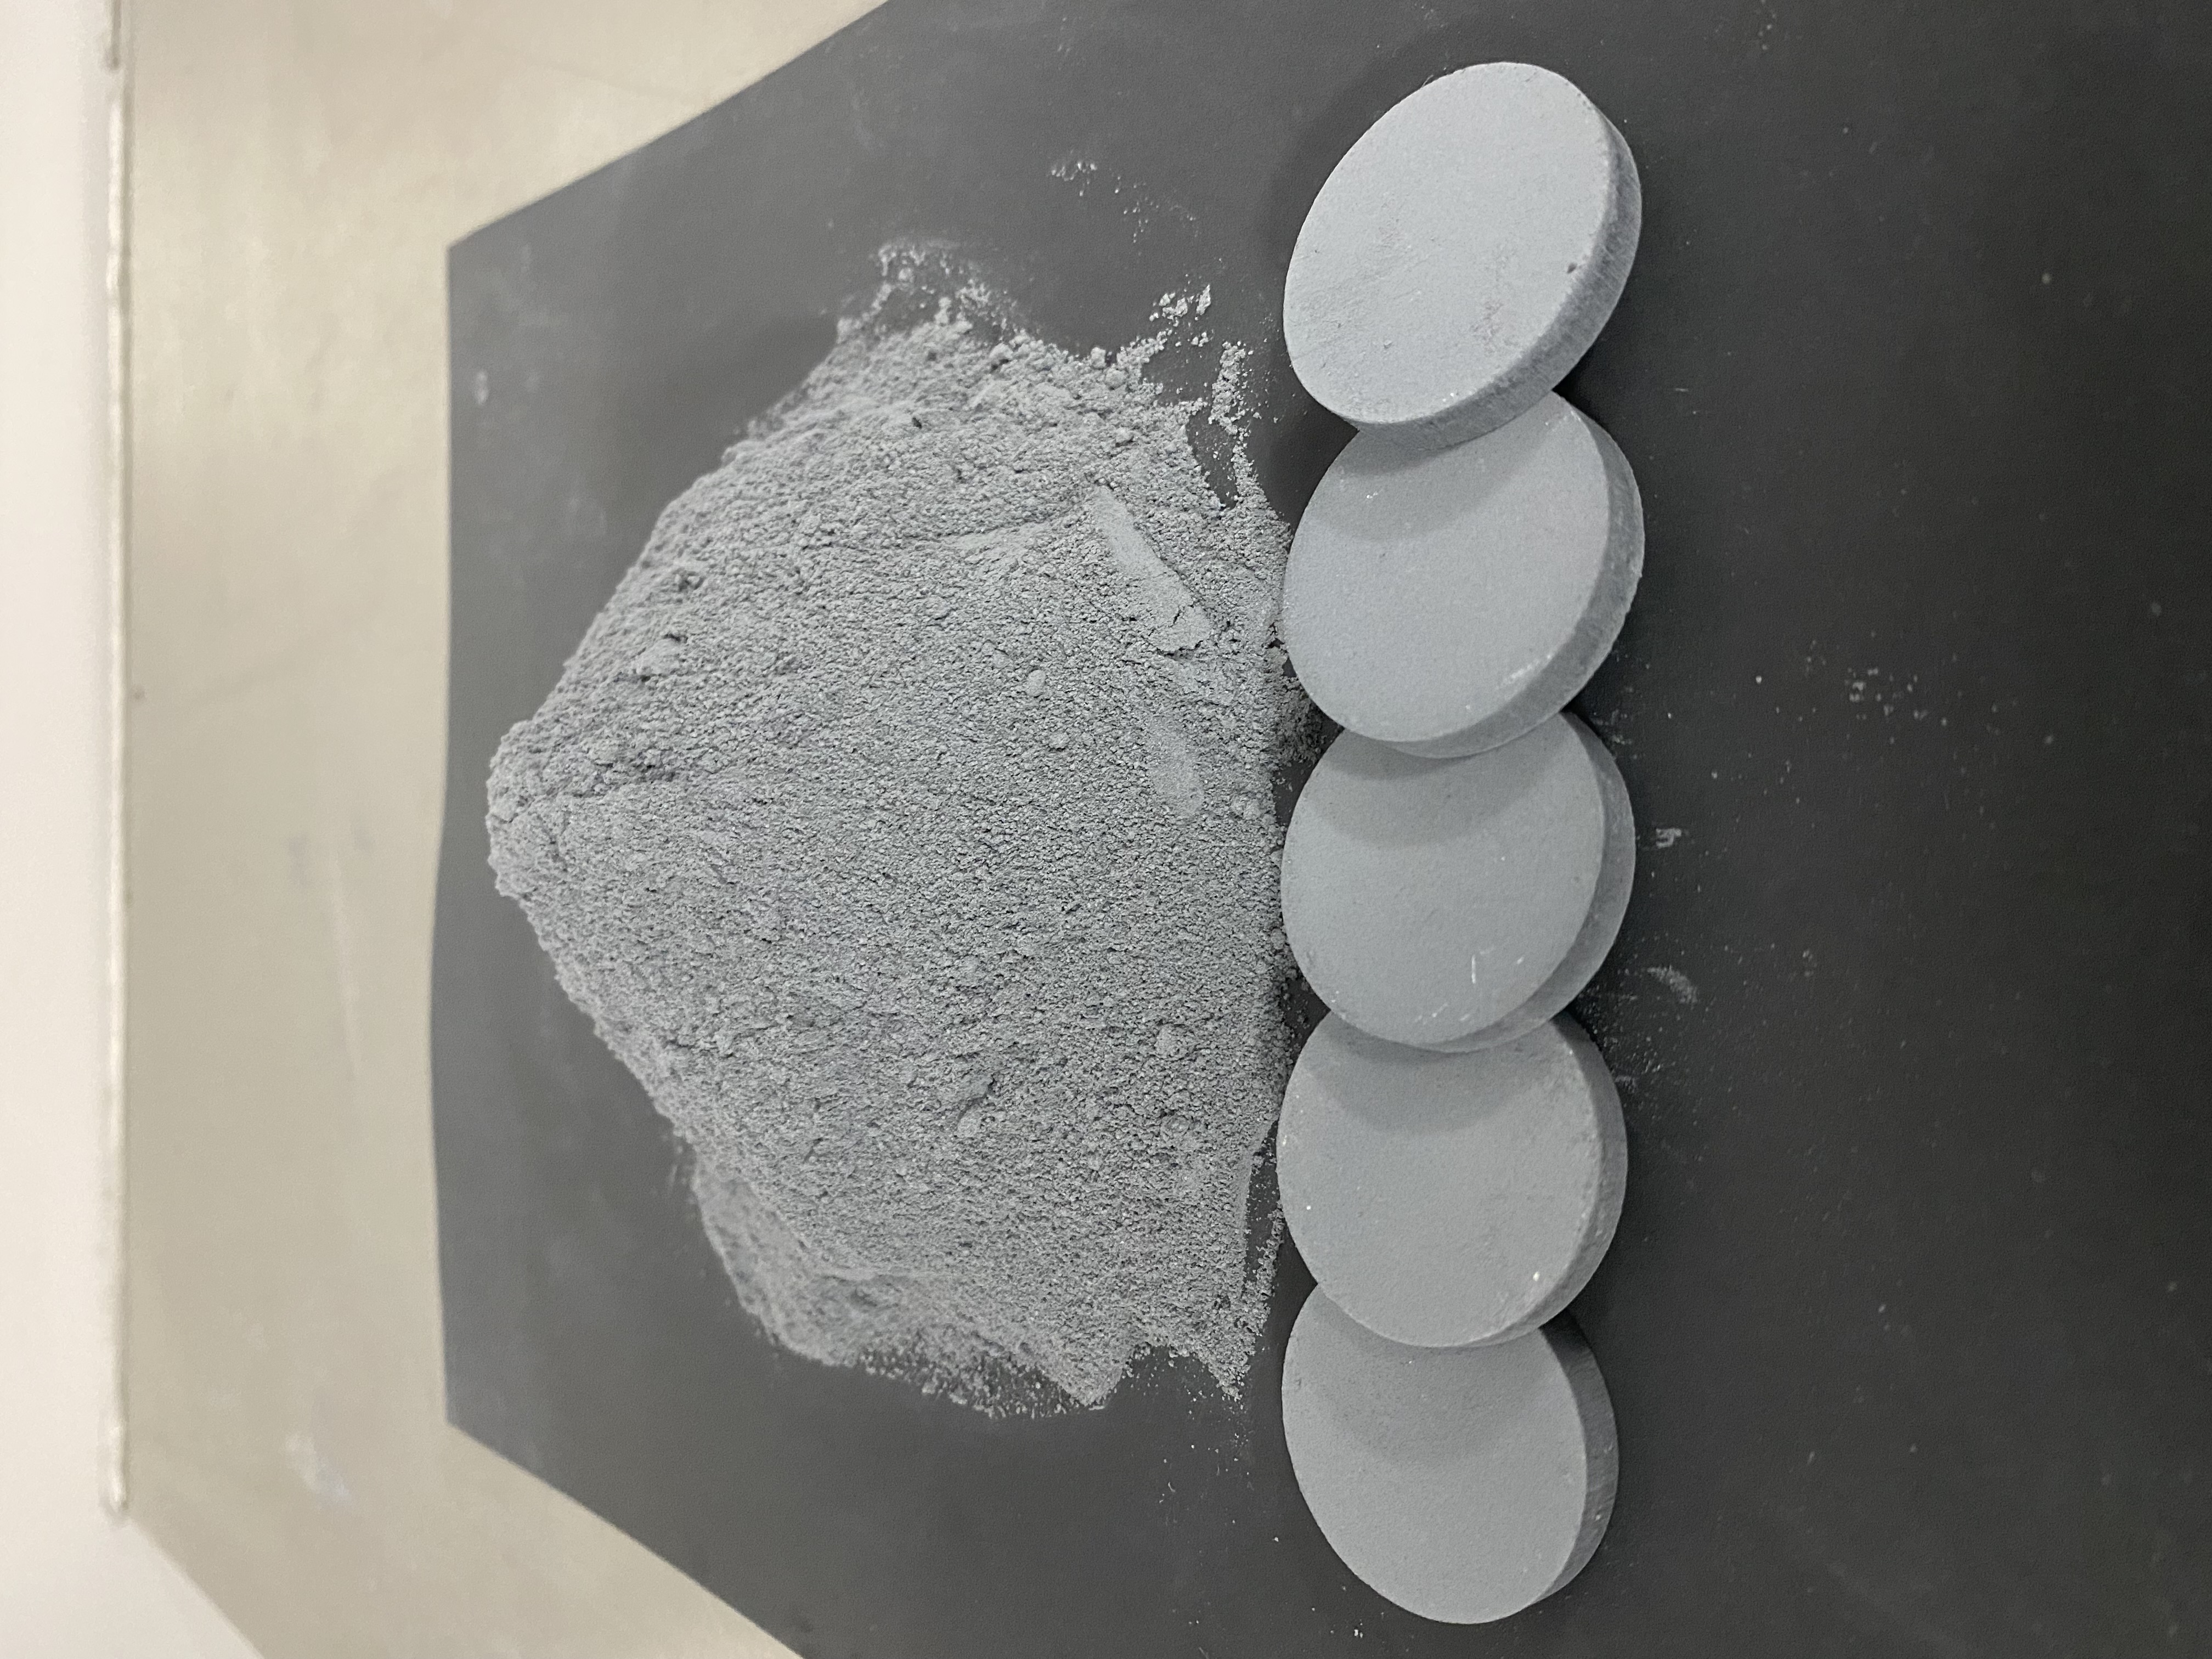 A sample of Metalysis' metal powder, pressed into discs.